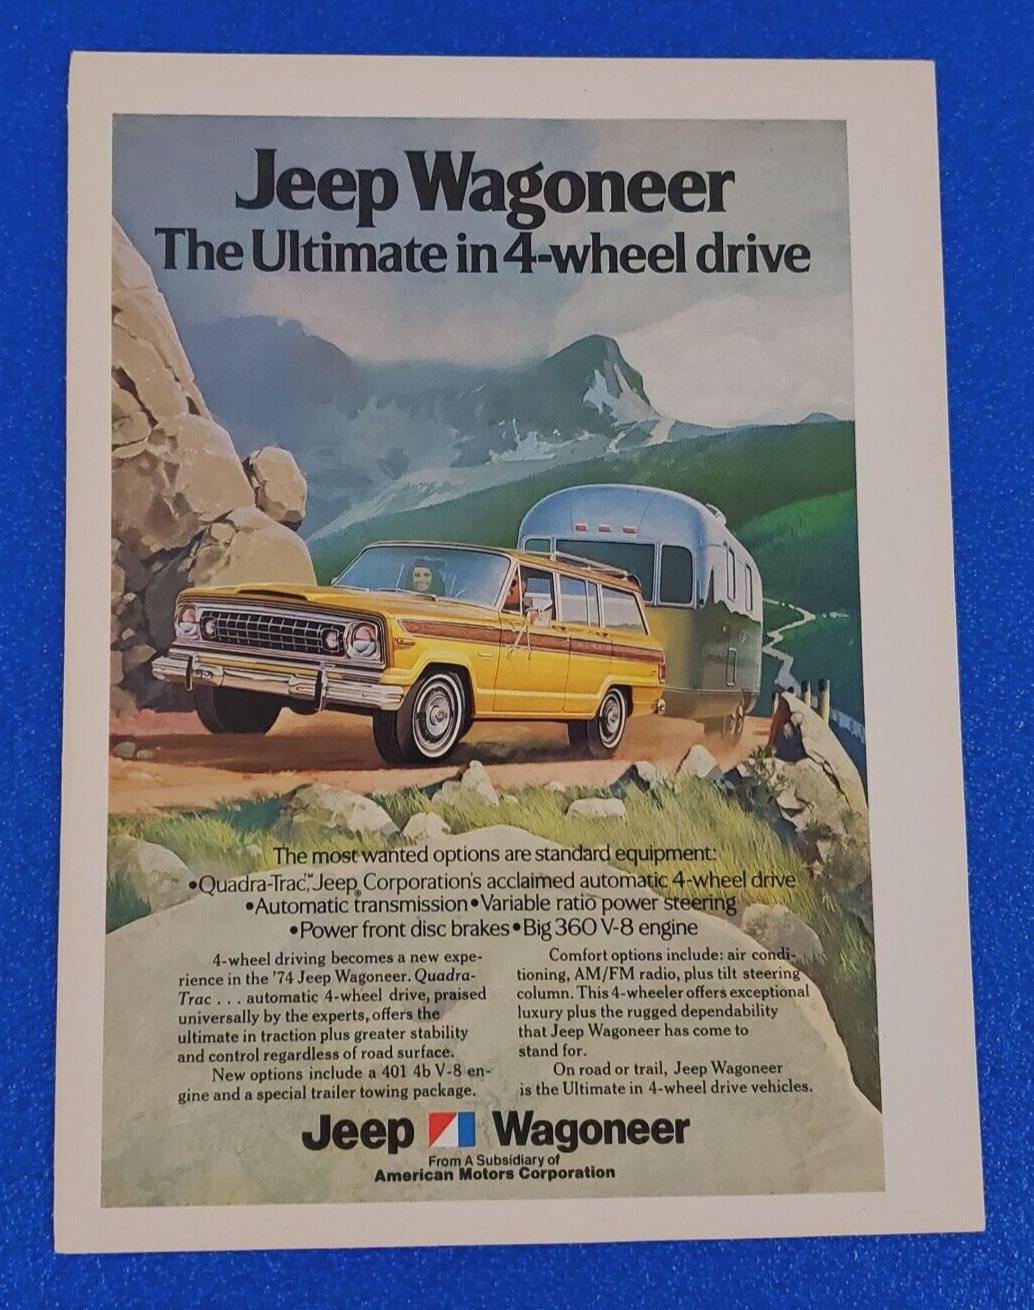 1974 JEEP WAGONEER 4-WHEEL DRIVE ORIGINAL COLOR PRINT AD ULTIMATE 4-WHEEL DRIVE